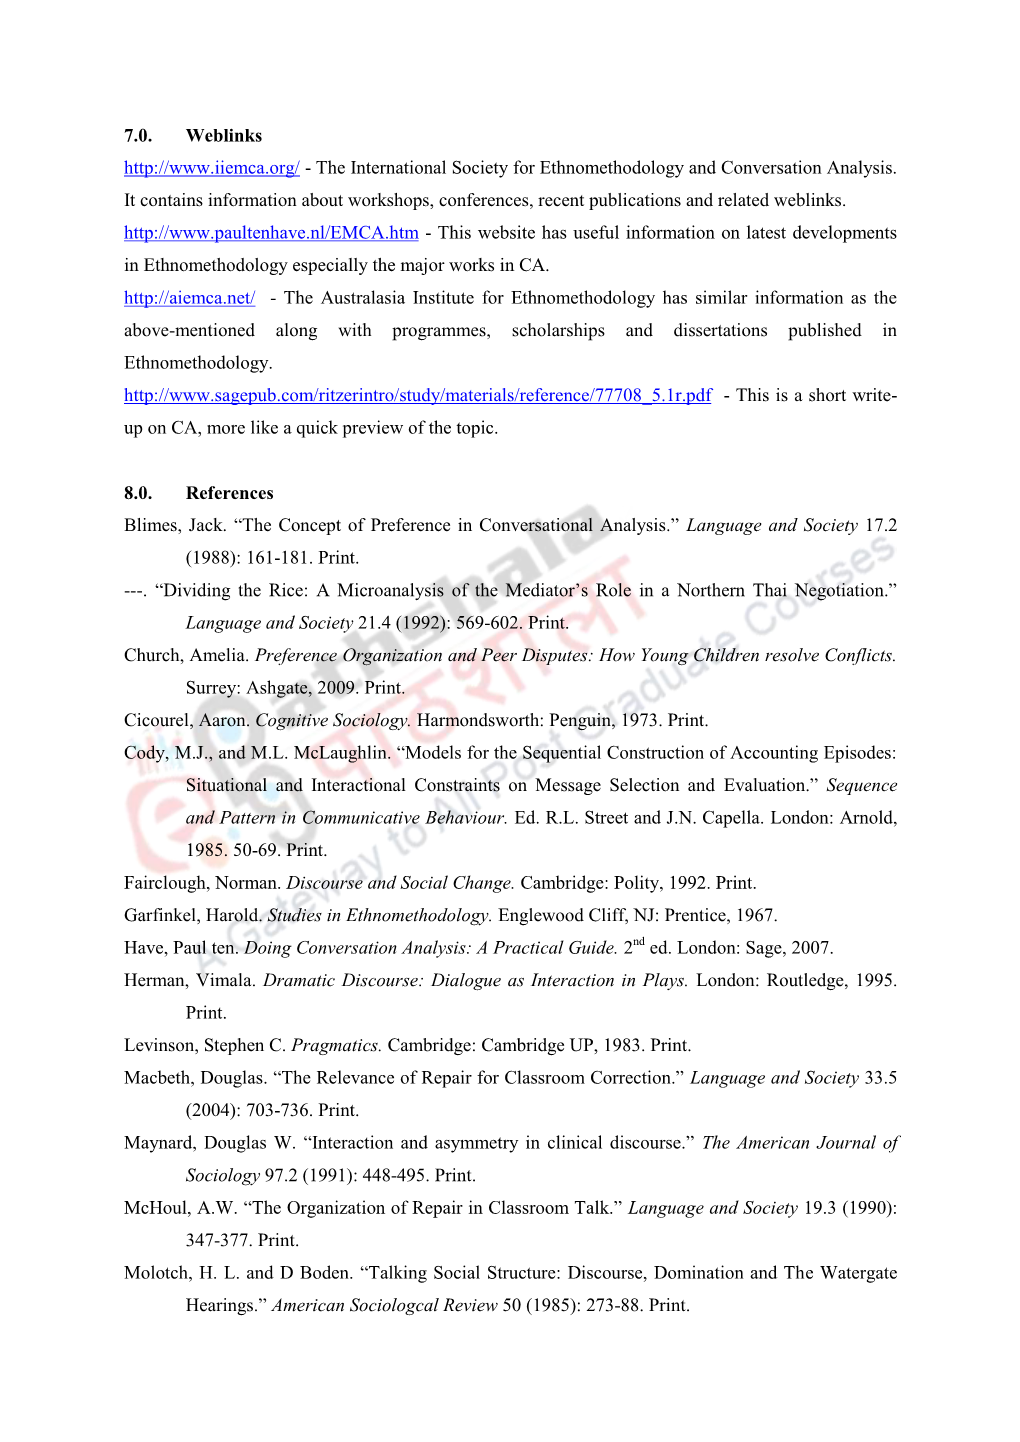 7.0. Weblinks - the International Society for Ethnomethodology and Conversation Analysis